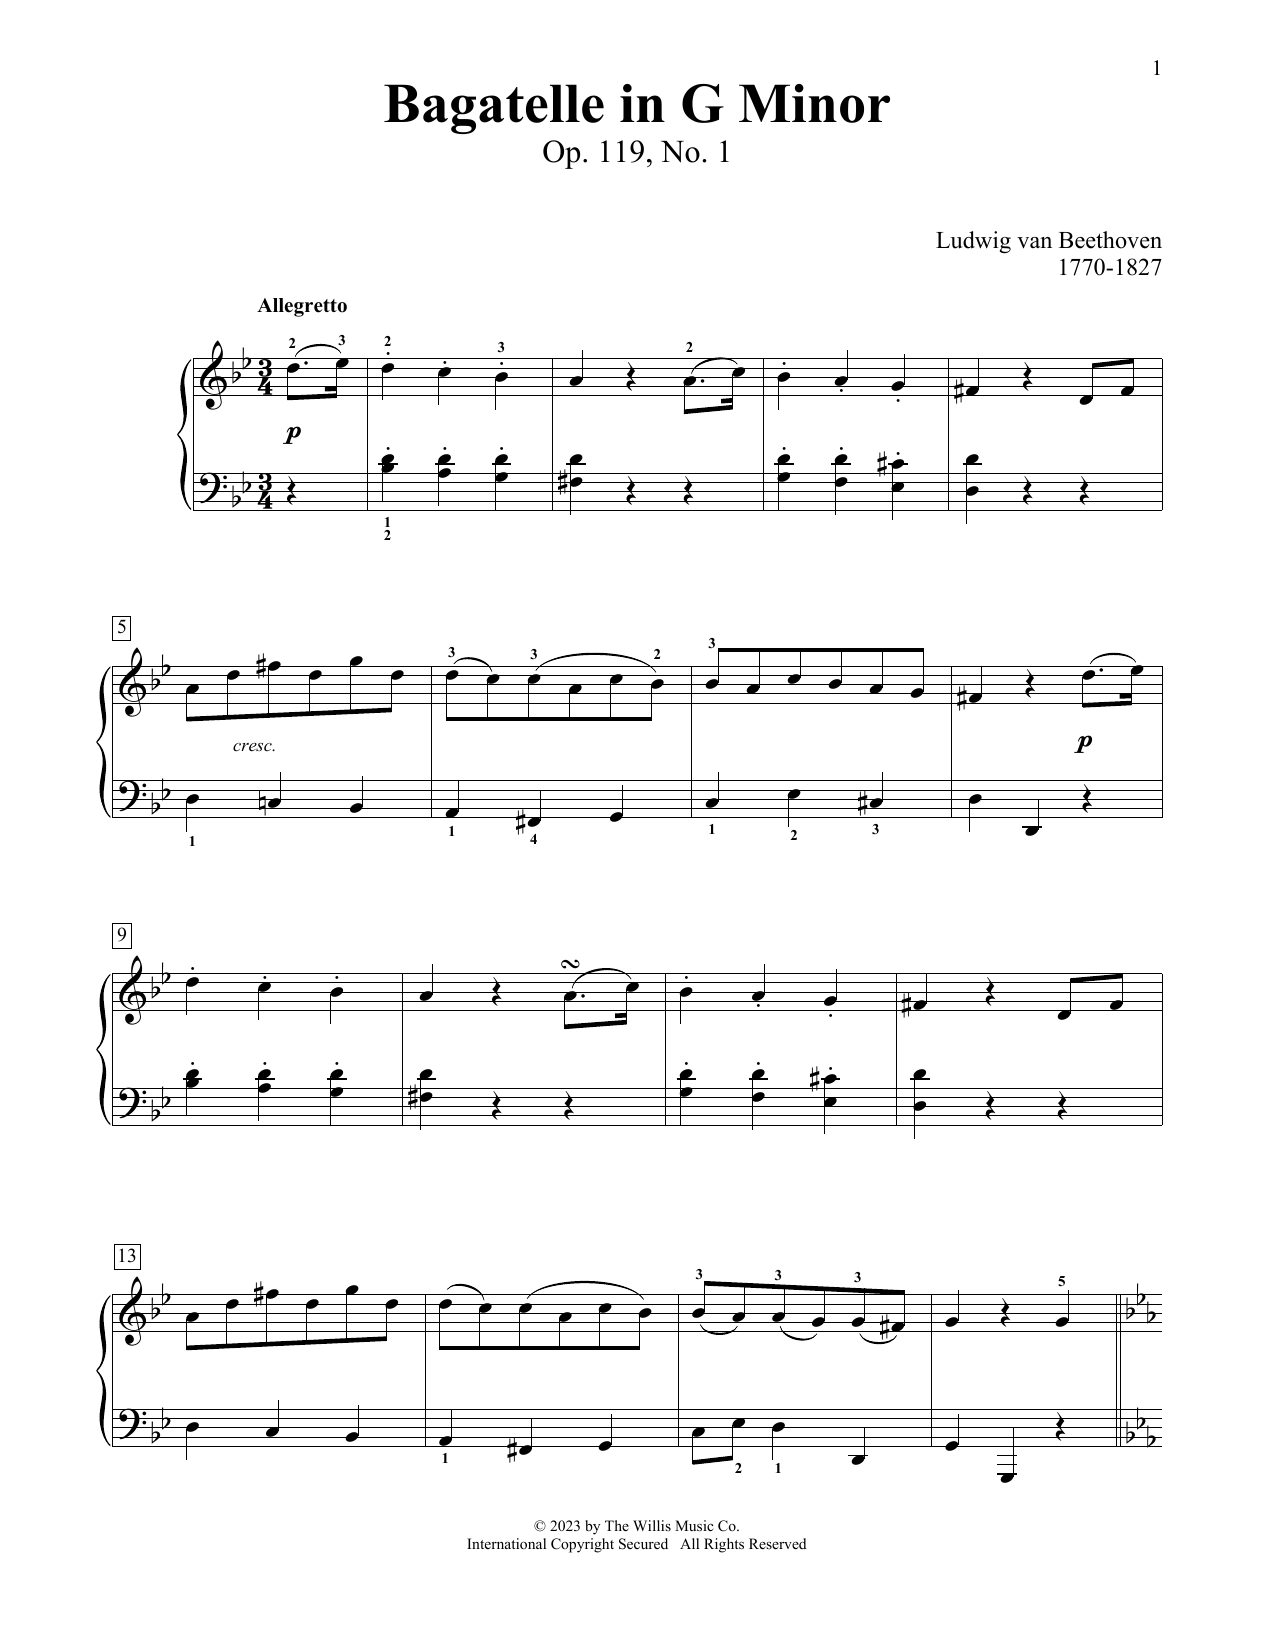 Ludwig van Beethoven Bagatelle In G Minor, Op. 119, No. 1 sheet music notes printable PDF score